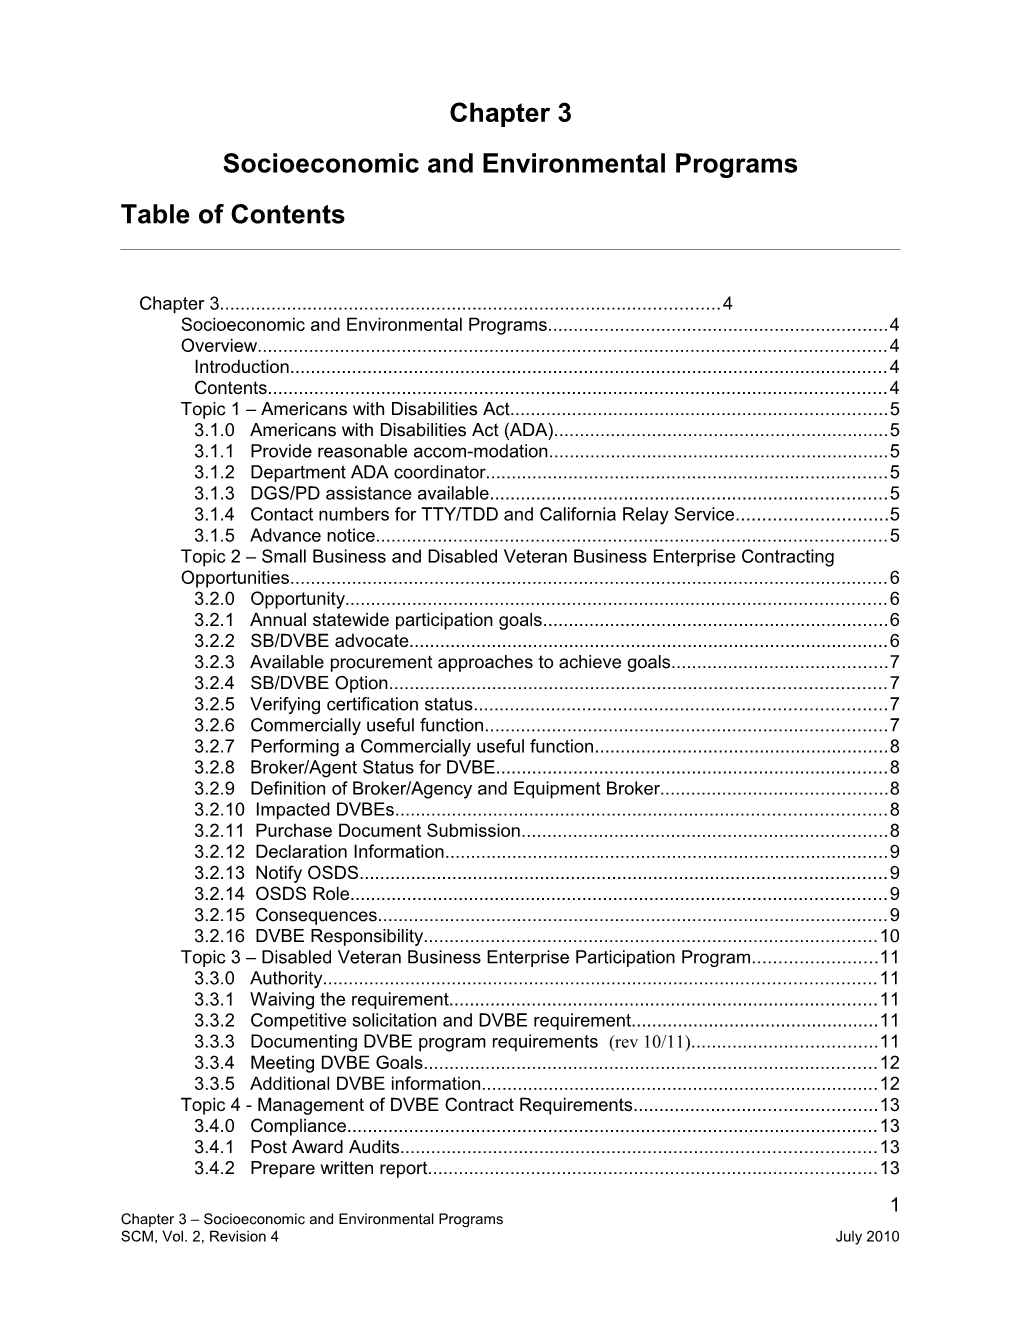 Socioeconomic and Environmental Programs